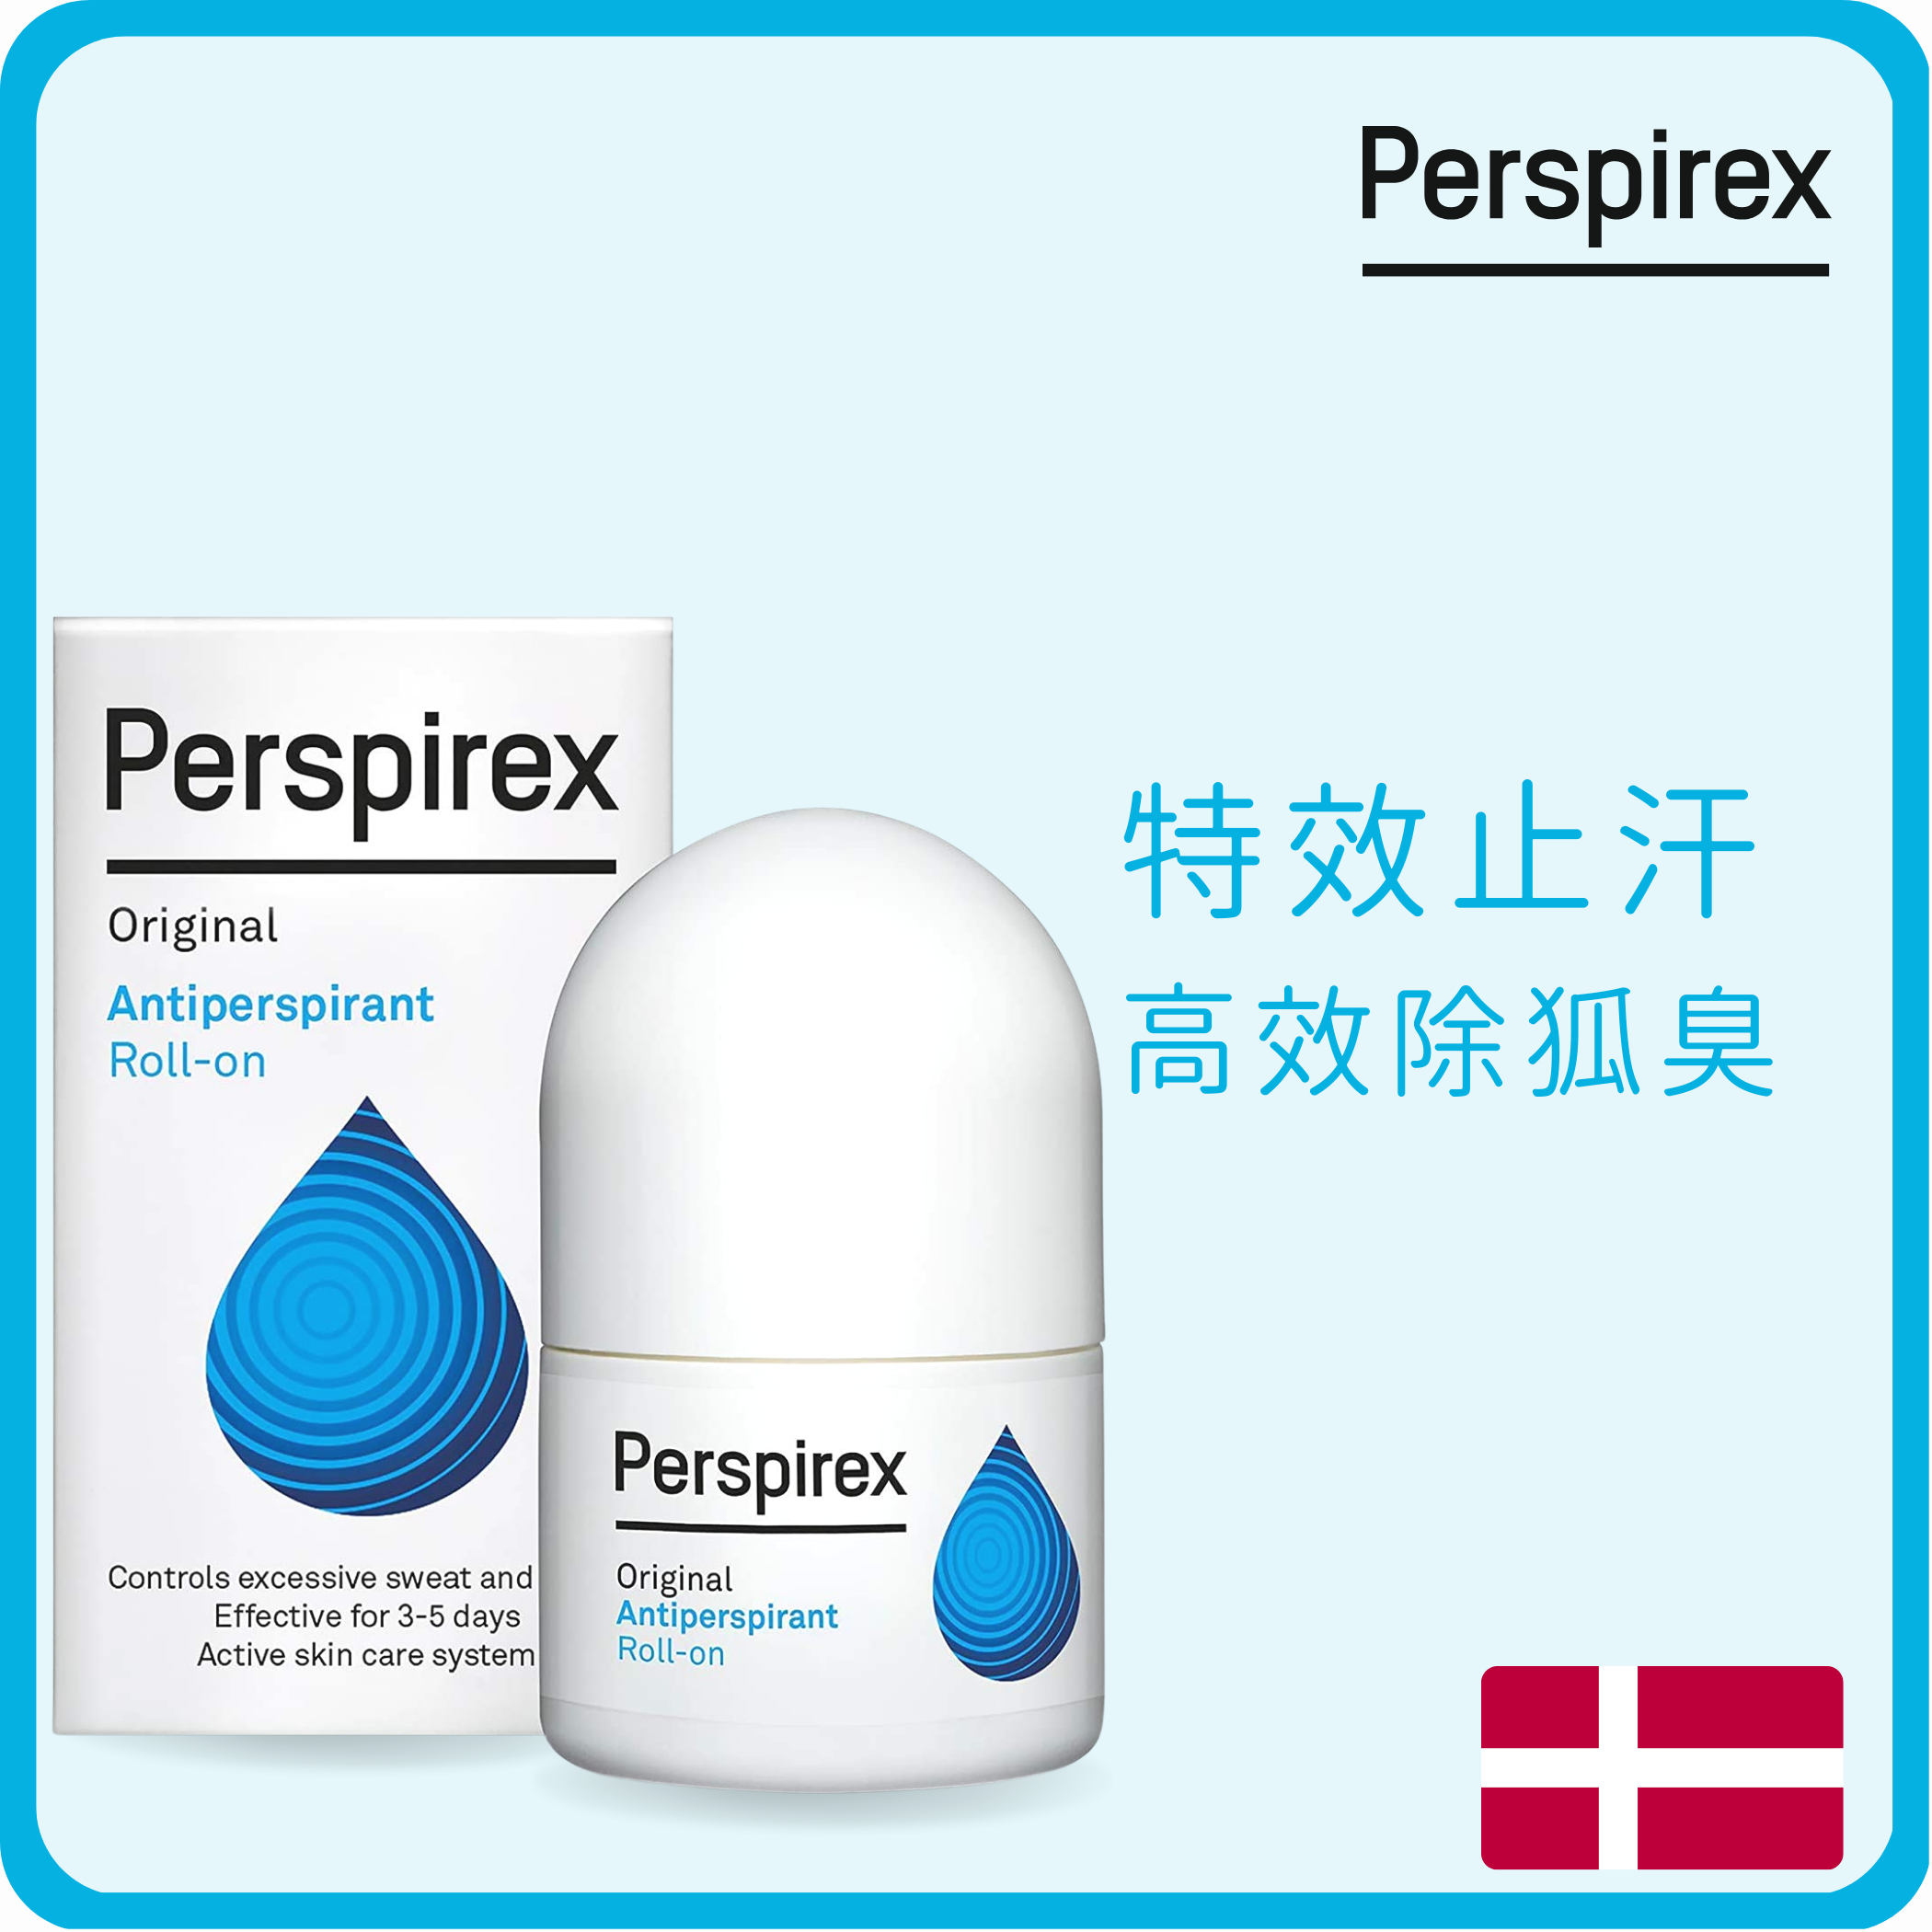 Perspirex Comfort 經典皇牌配方止汗劑 20ml (止汗劑|汗臭|臭狐|除臭|香體膏|止汗膏)